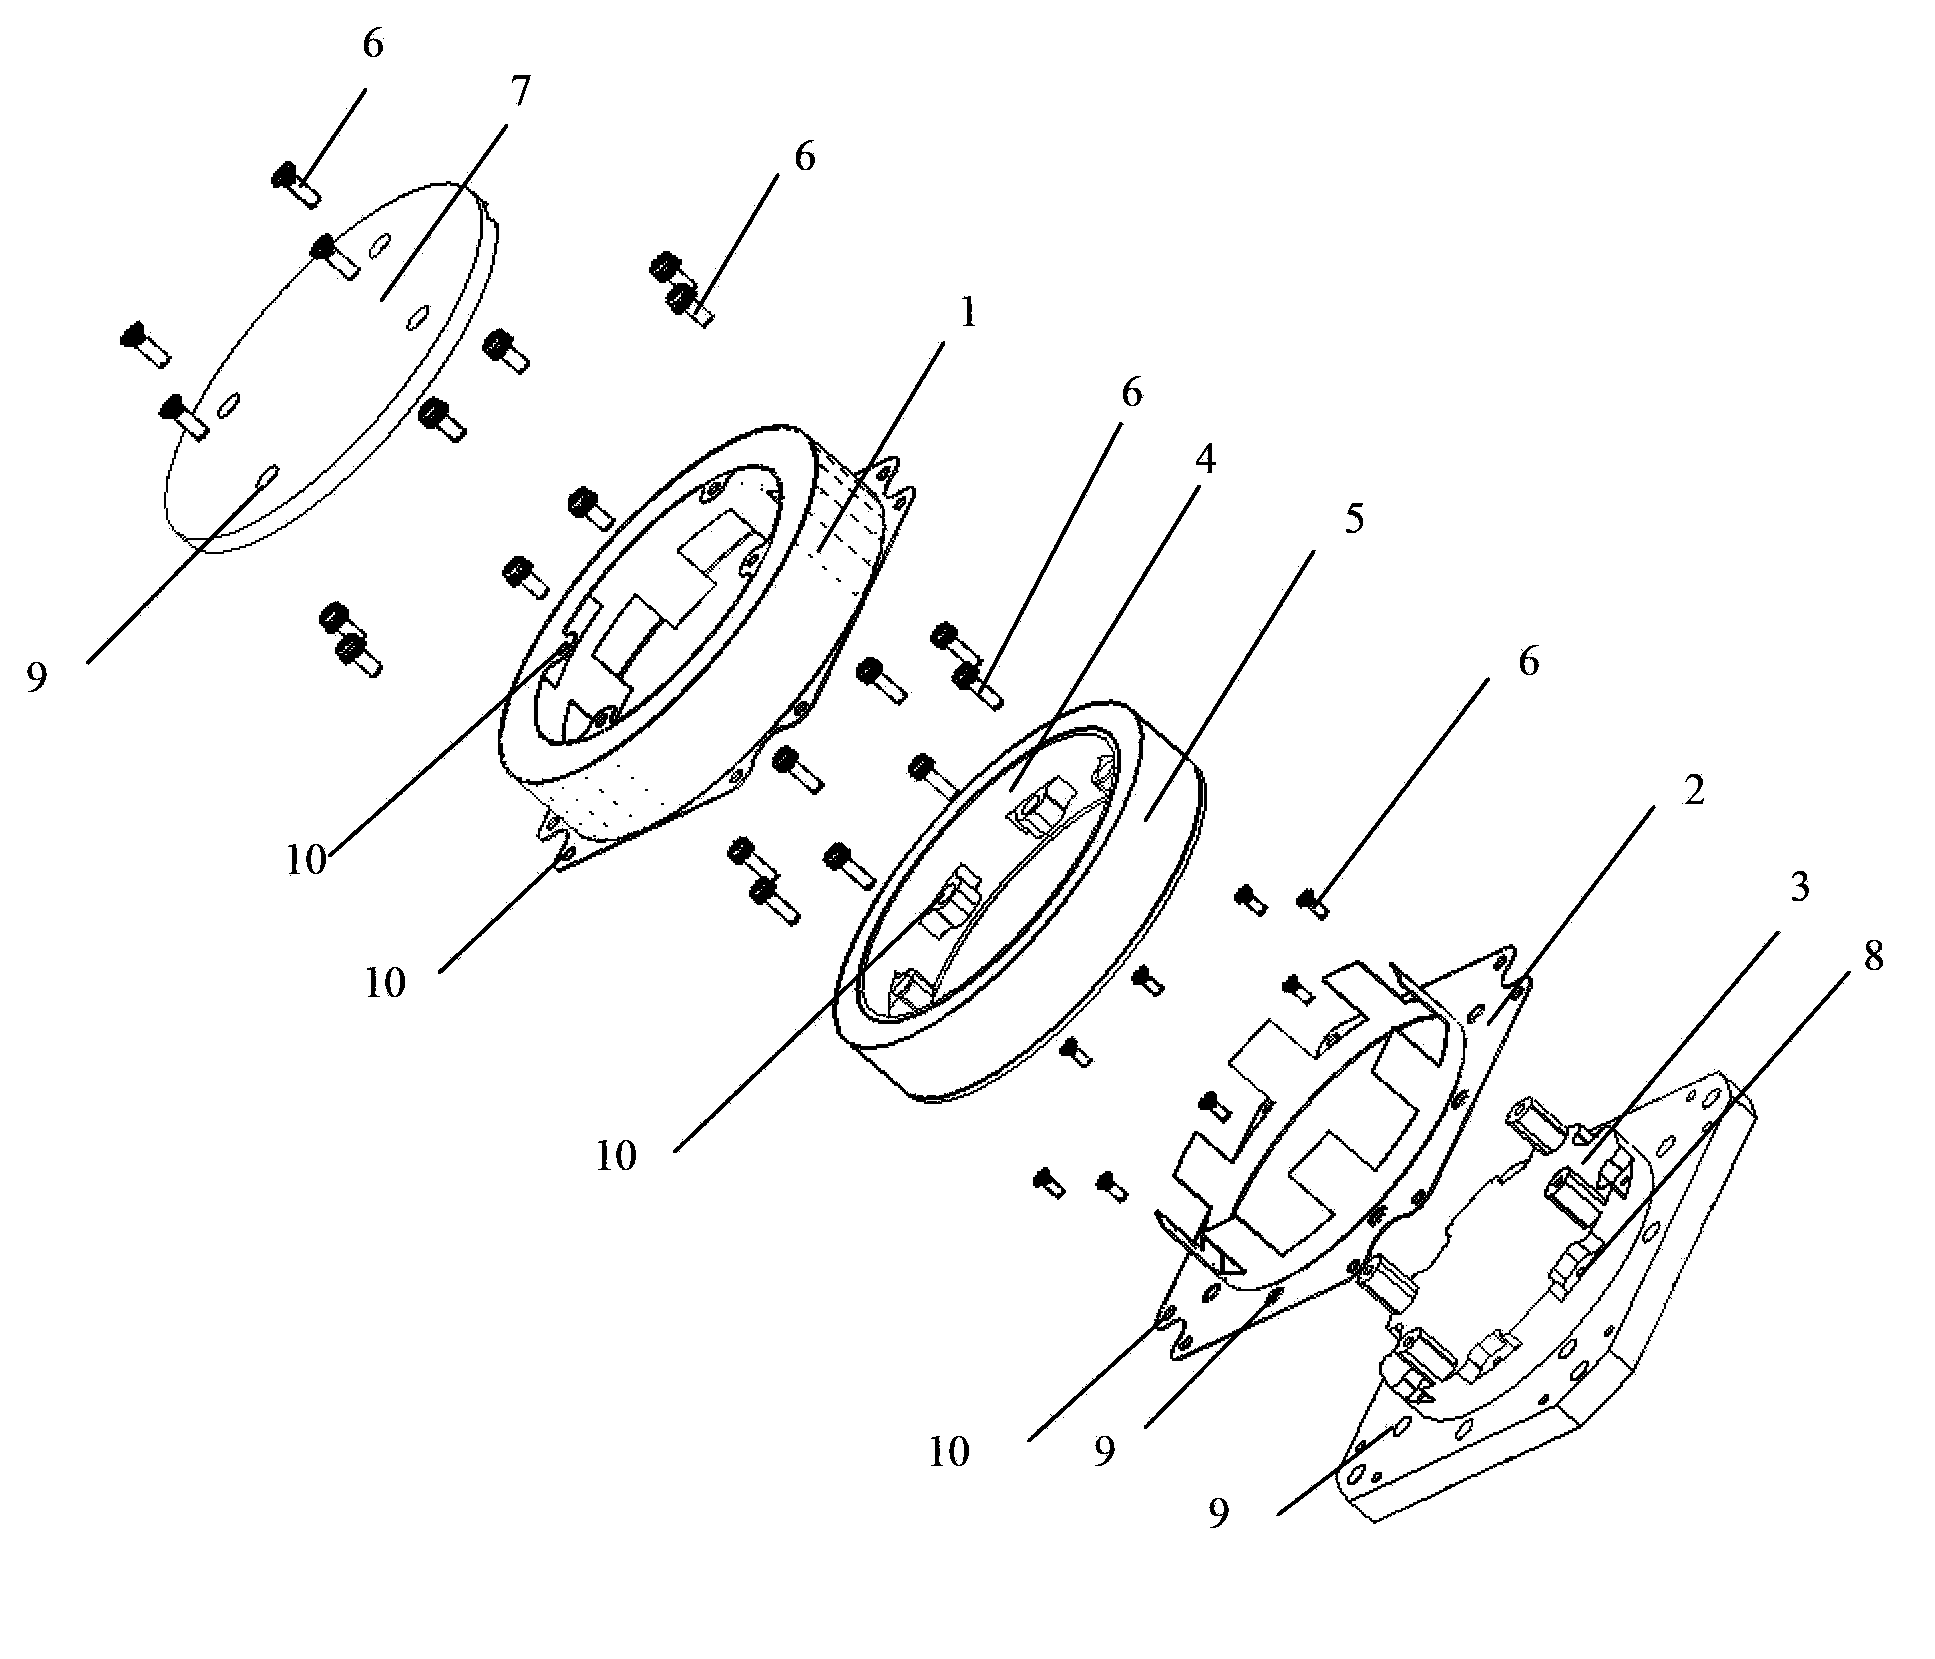 Magnetic shielding case of fiber-optic gyroscope